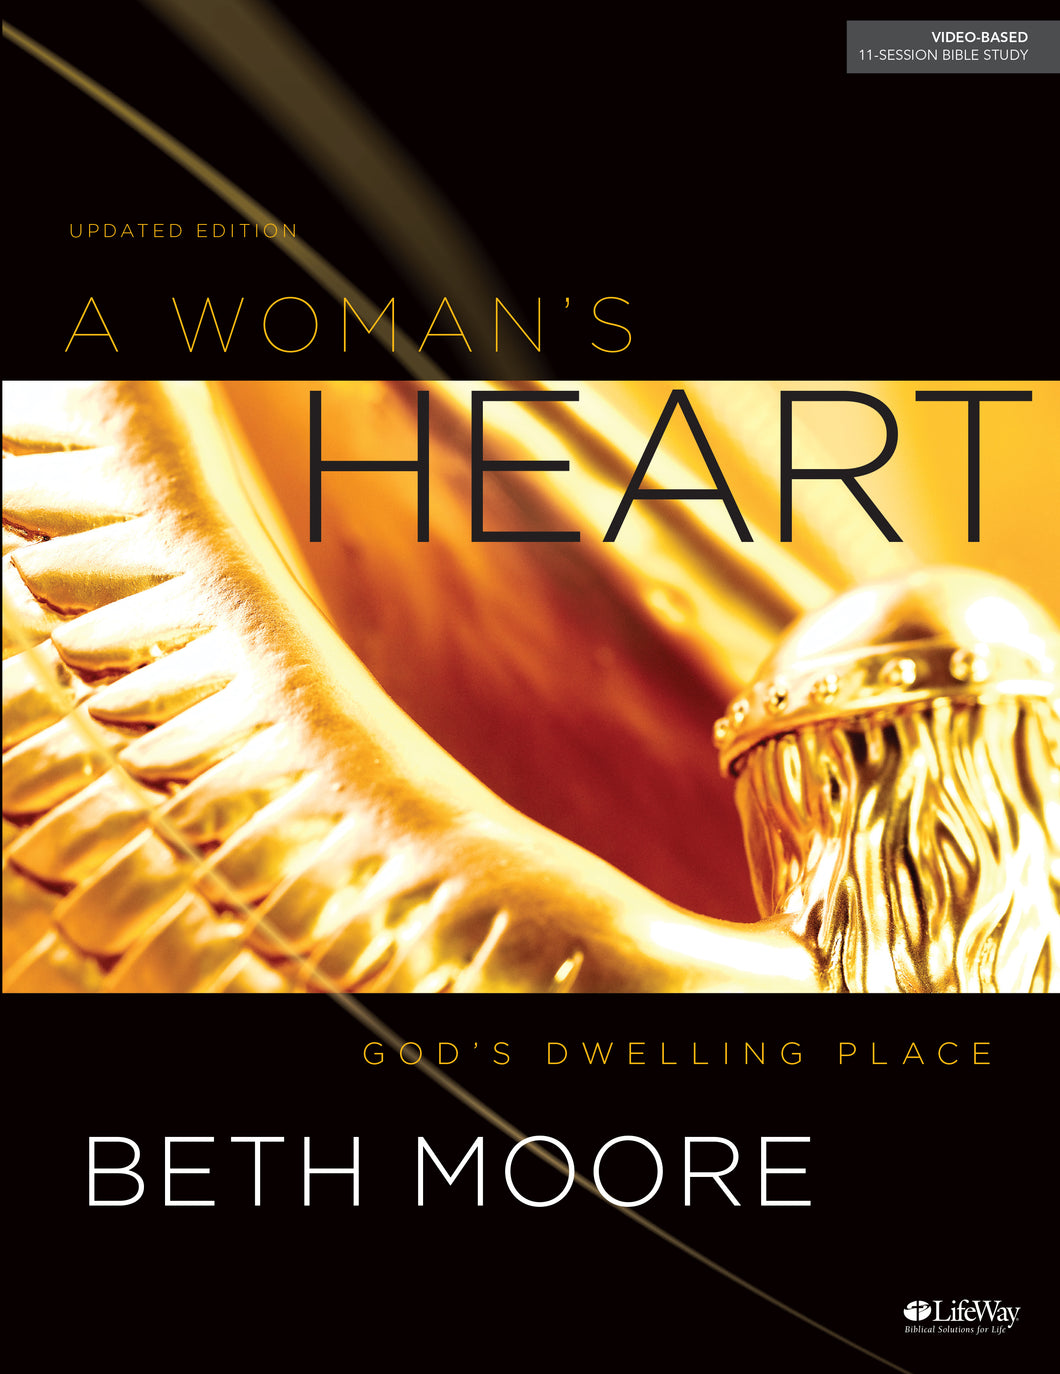 A WOMAN'S HEART BIBLE STUDY BOOK